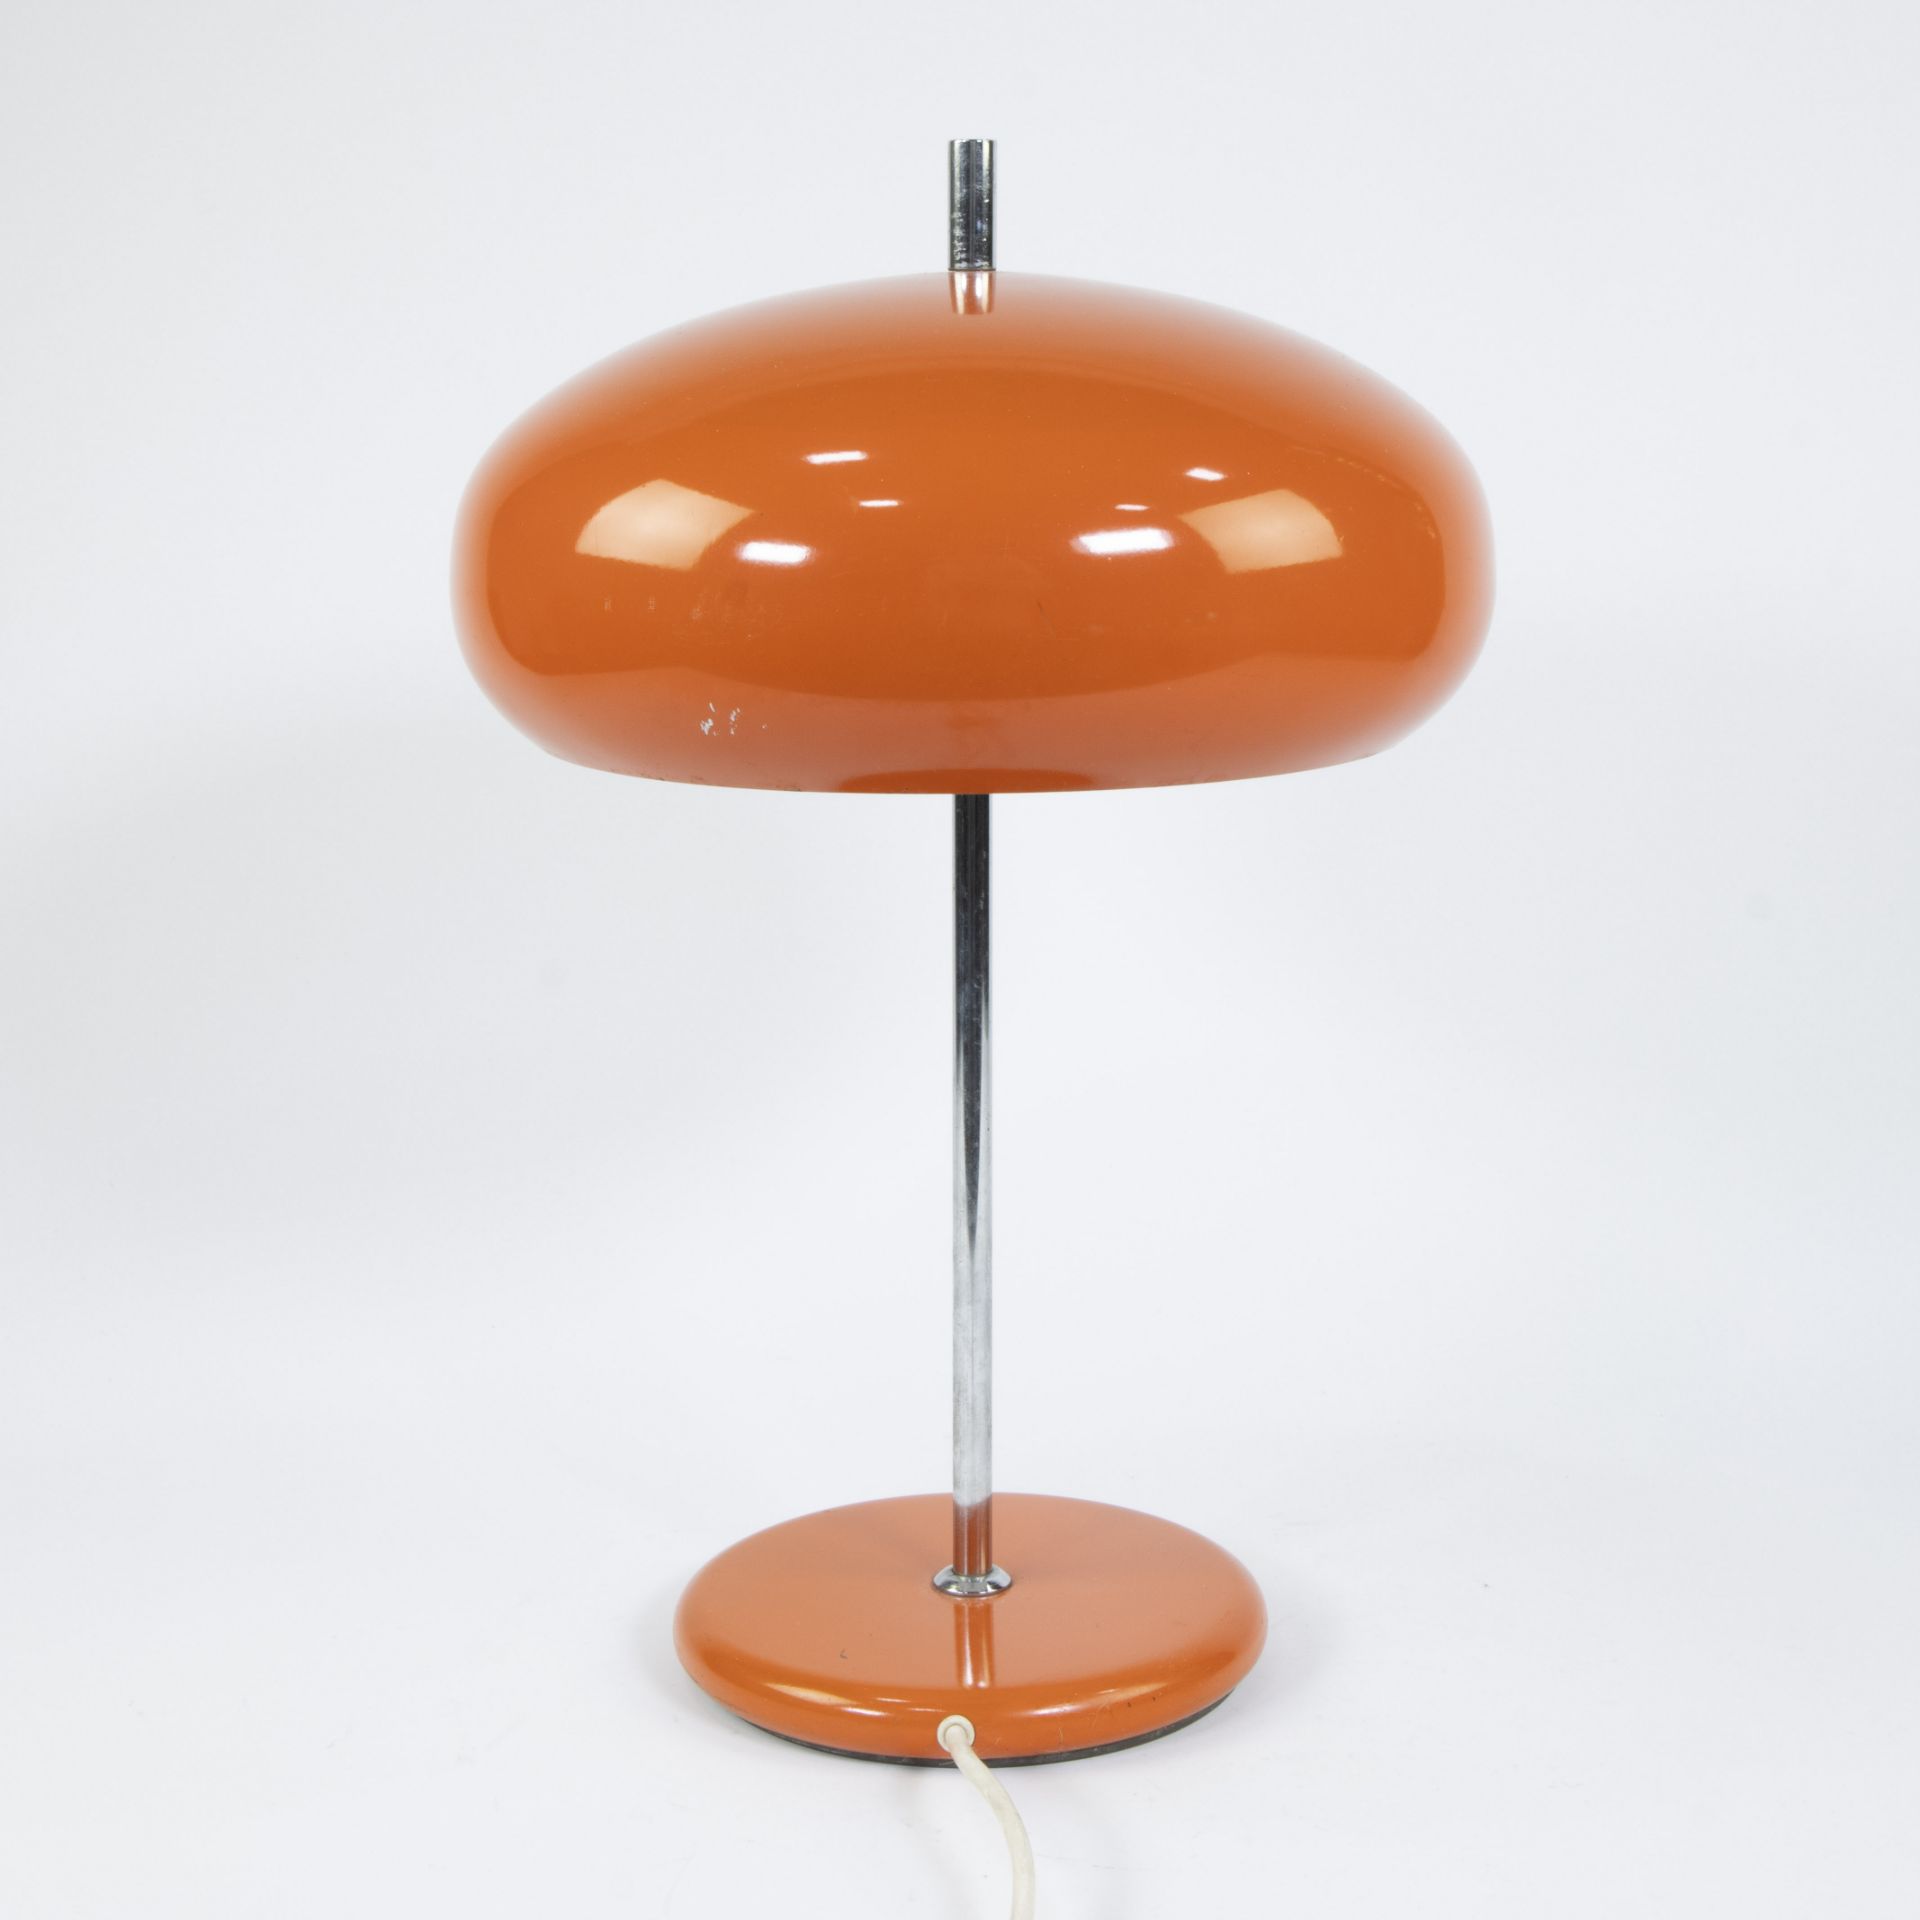 Vintage orange mushroom lamp from the 1970s - Image 3 of 4